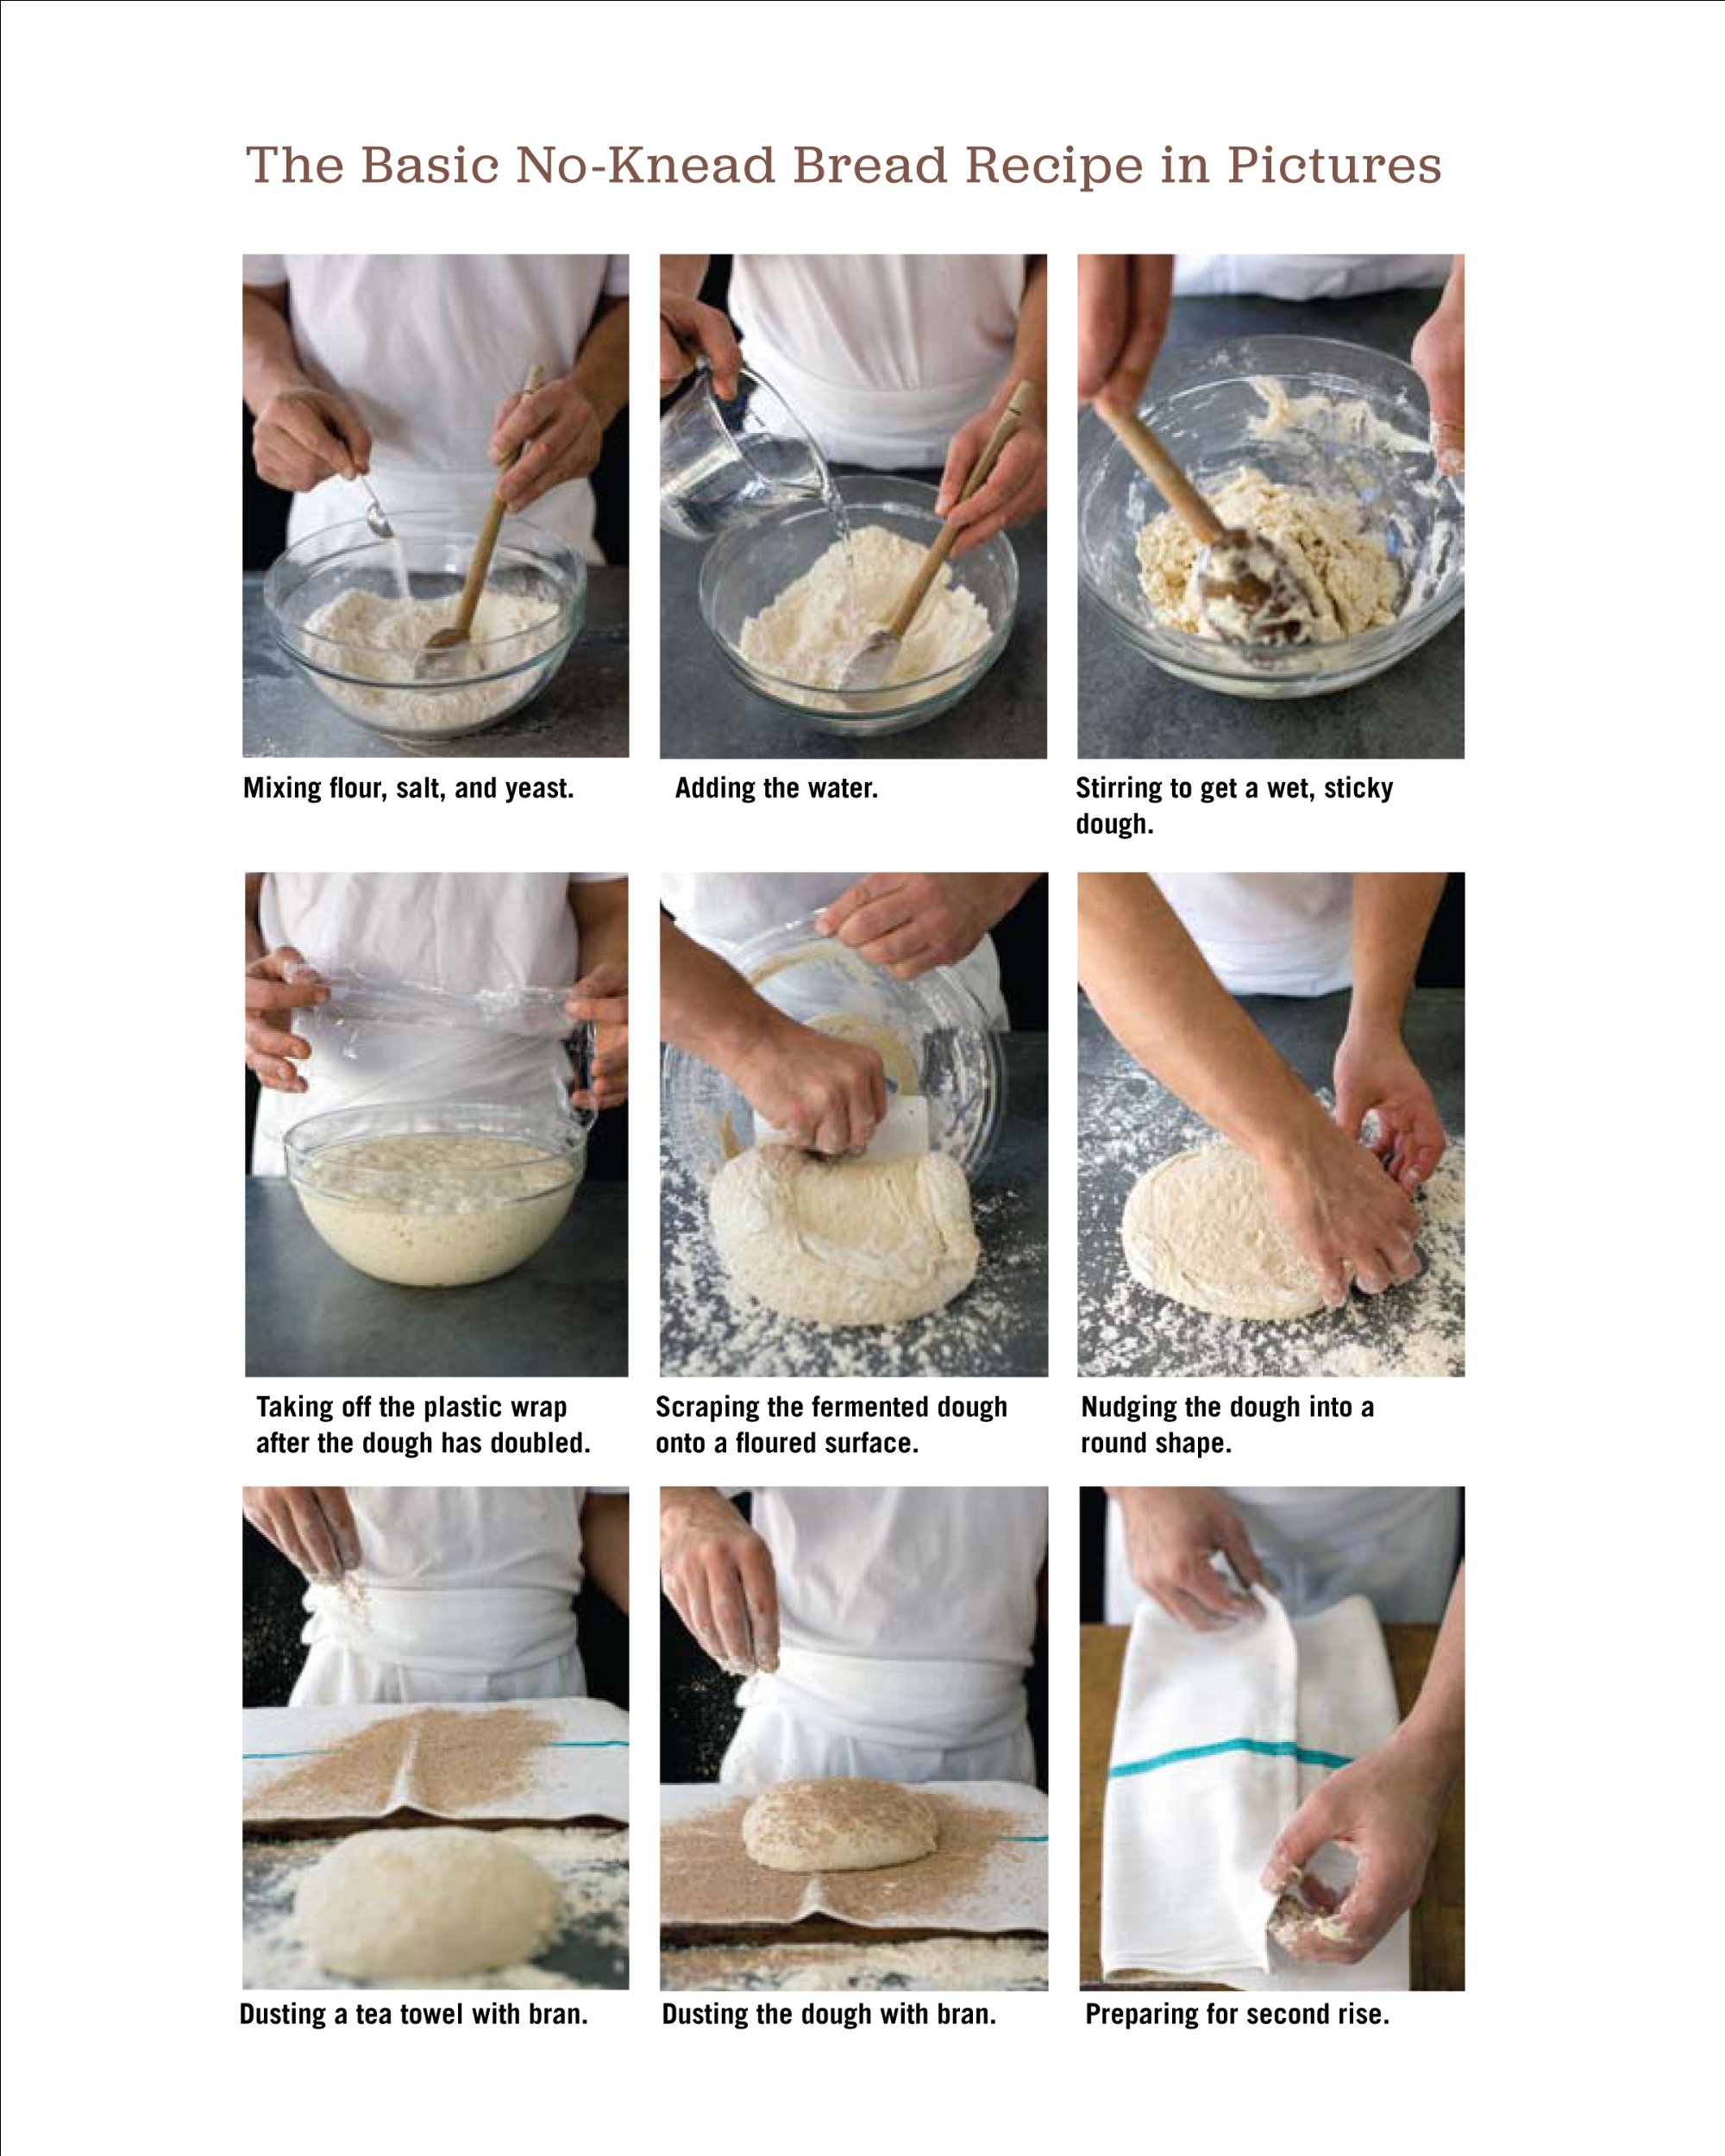 My Bread: The Revolutionary No-Work, No-Knead Method